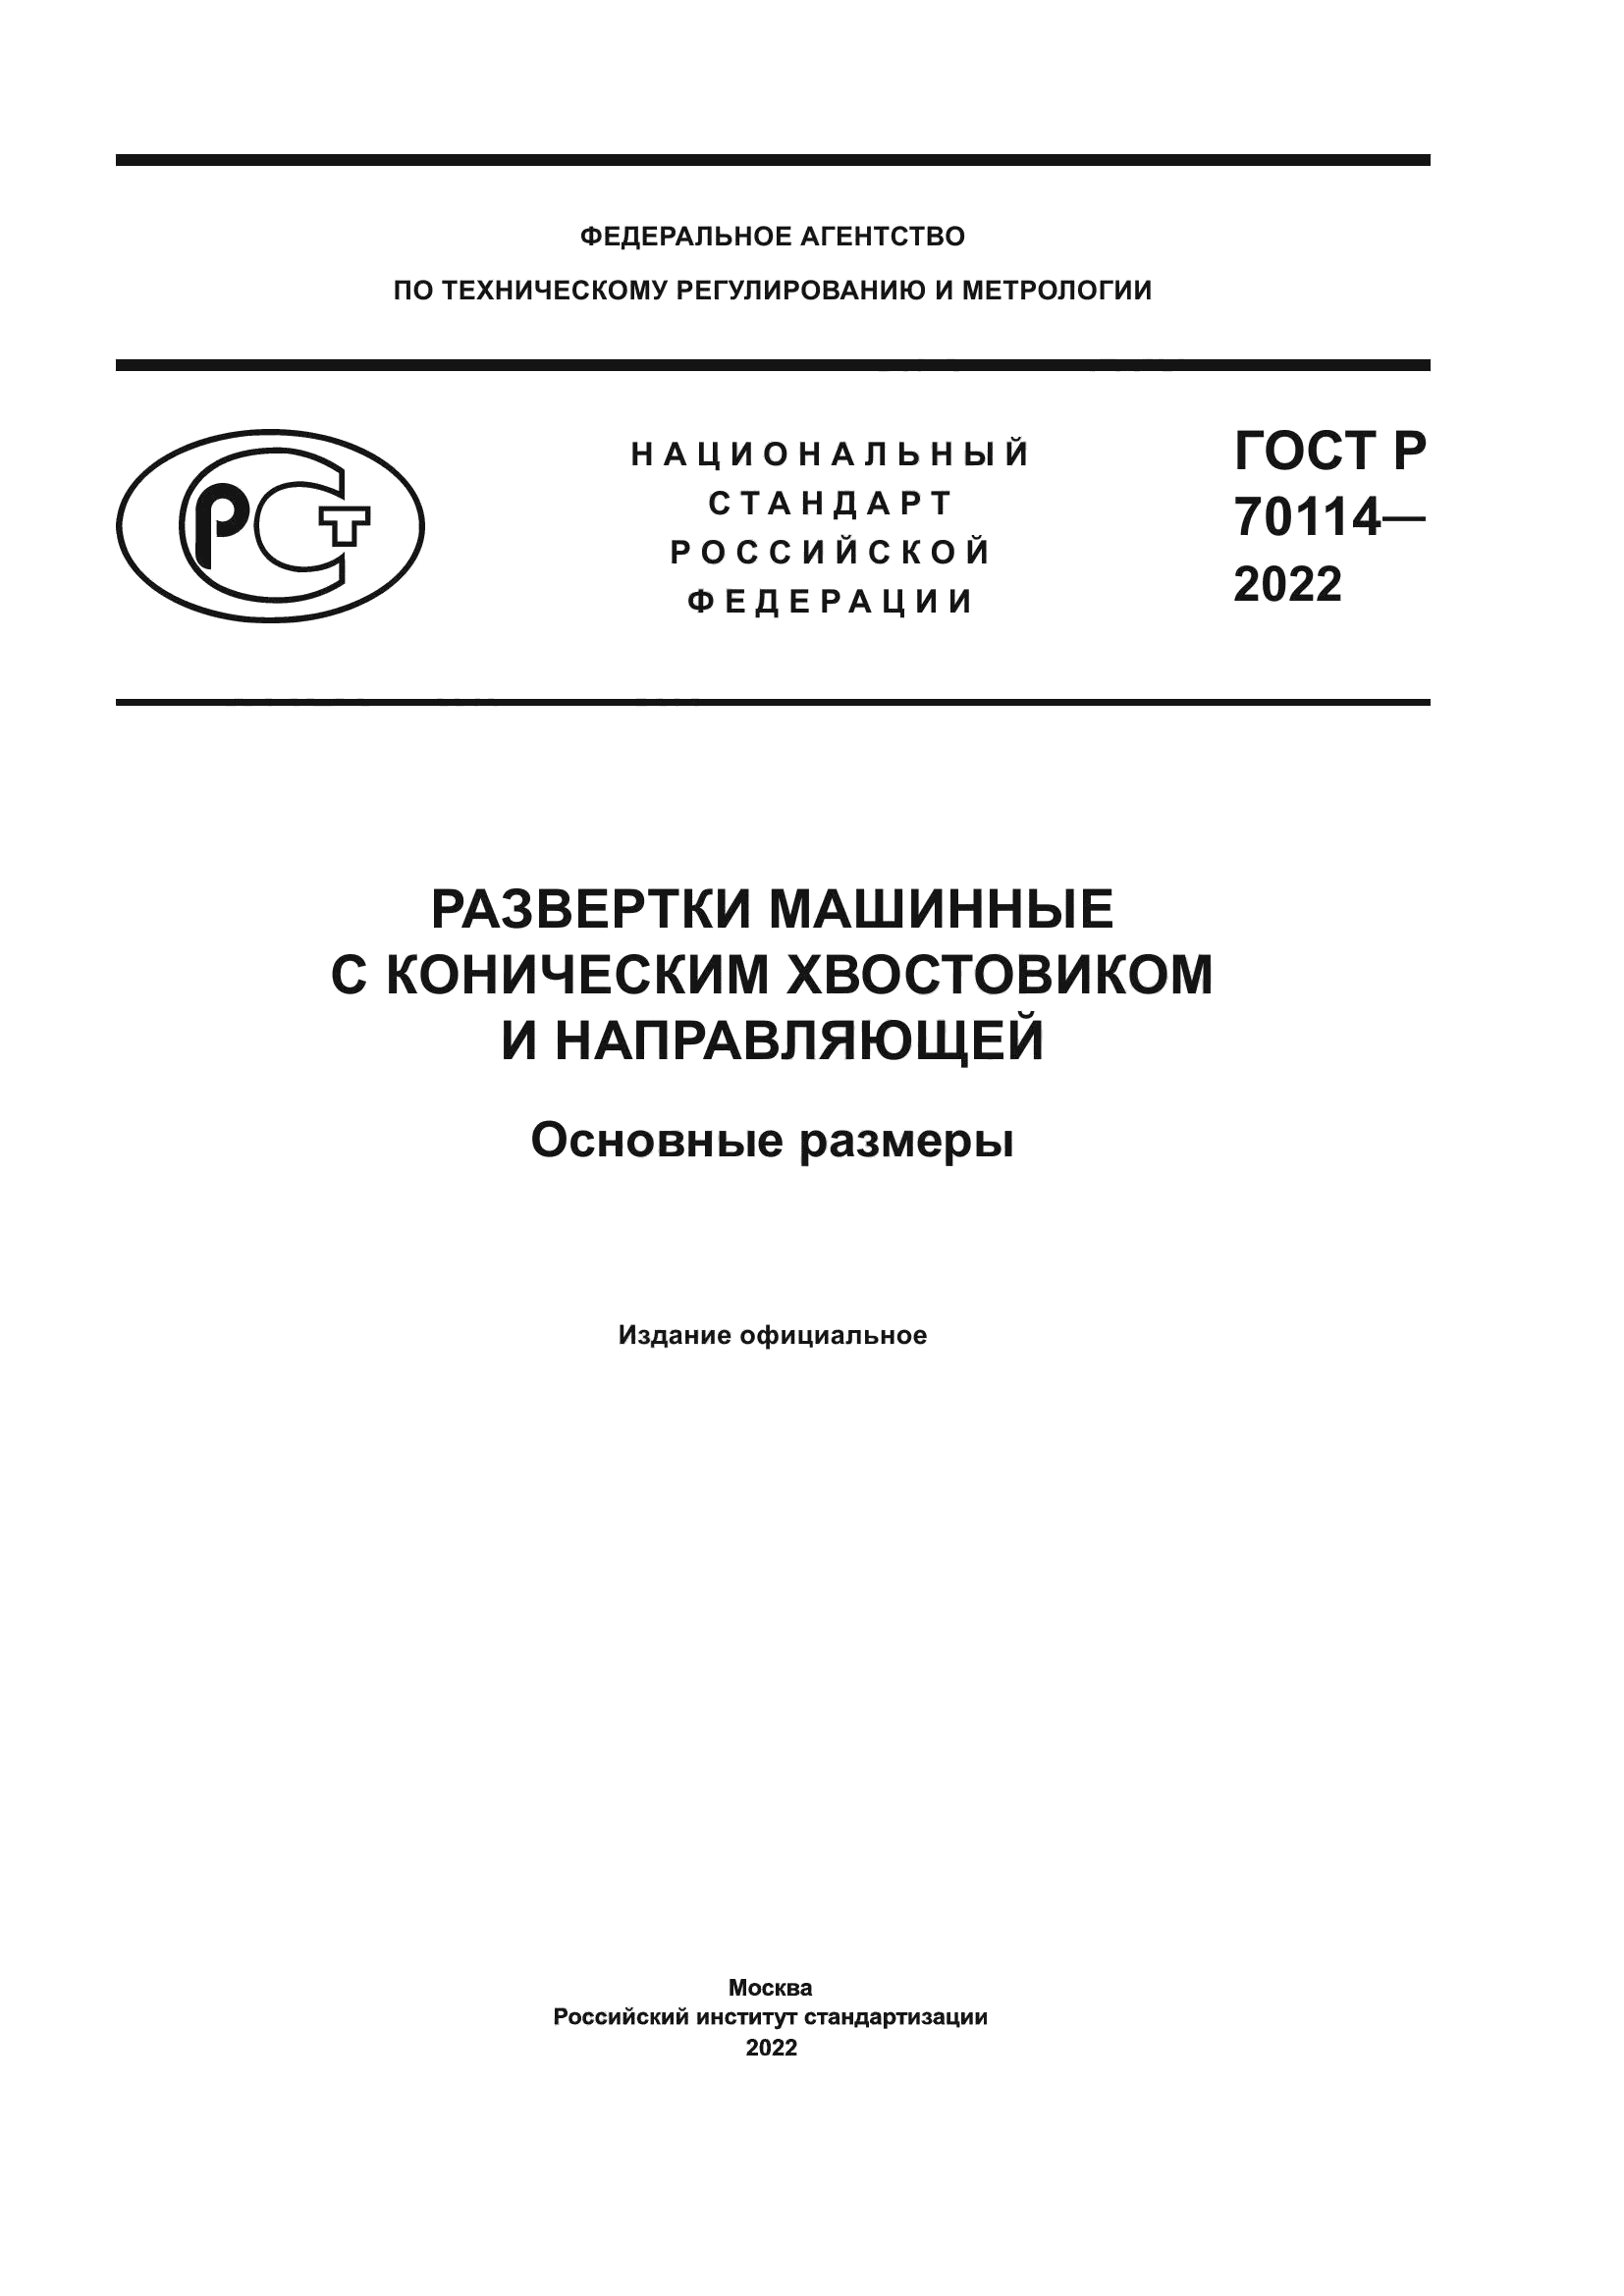 ГОСТ Р 70114-2022